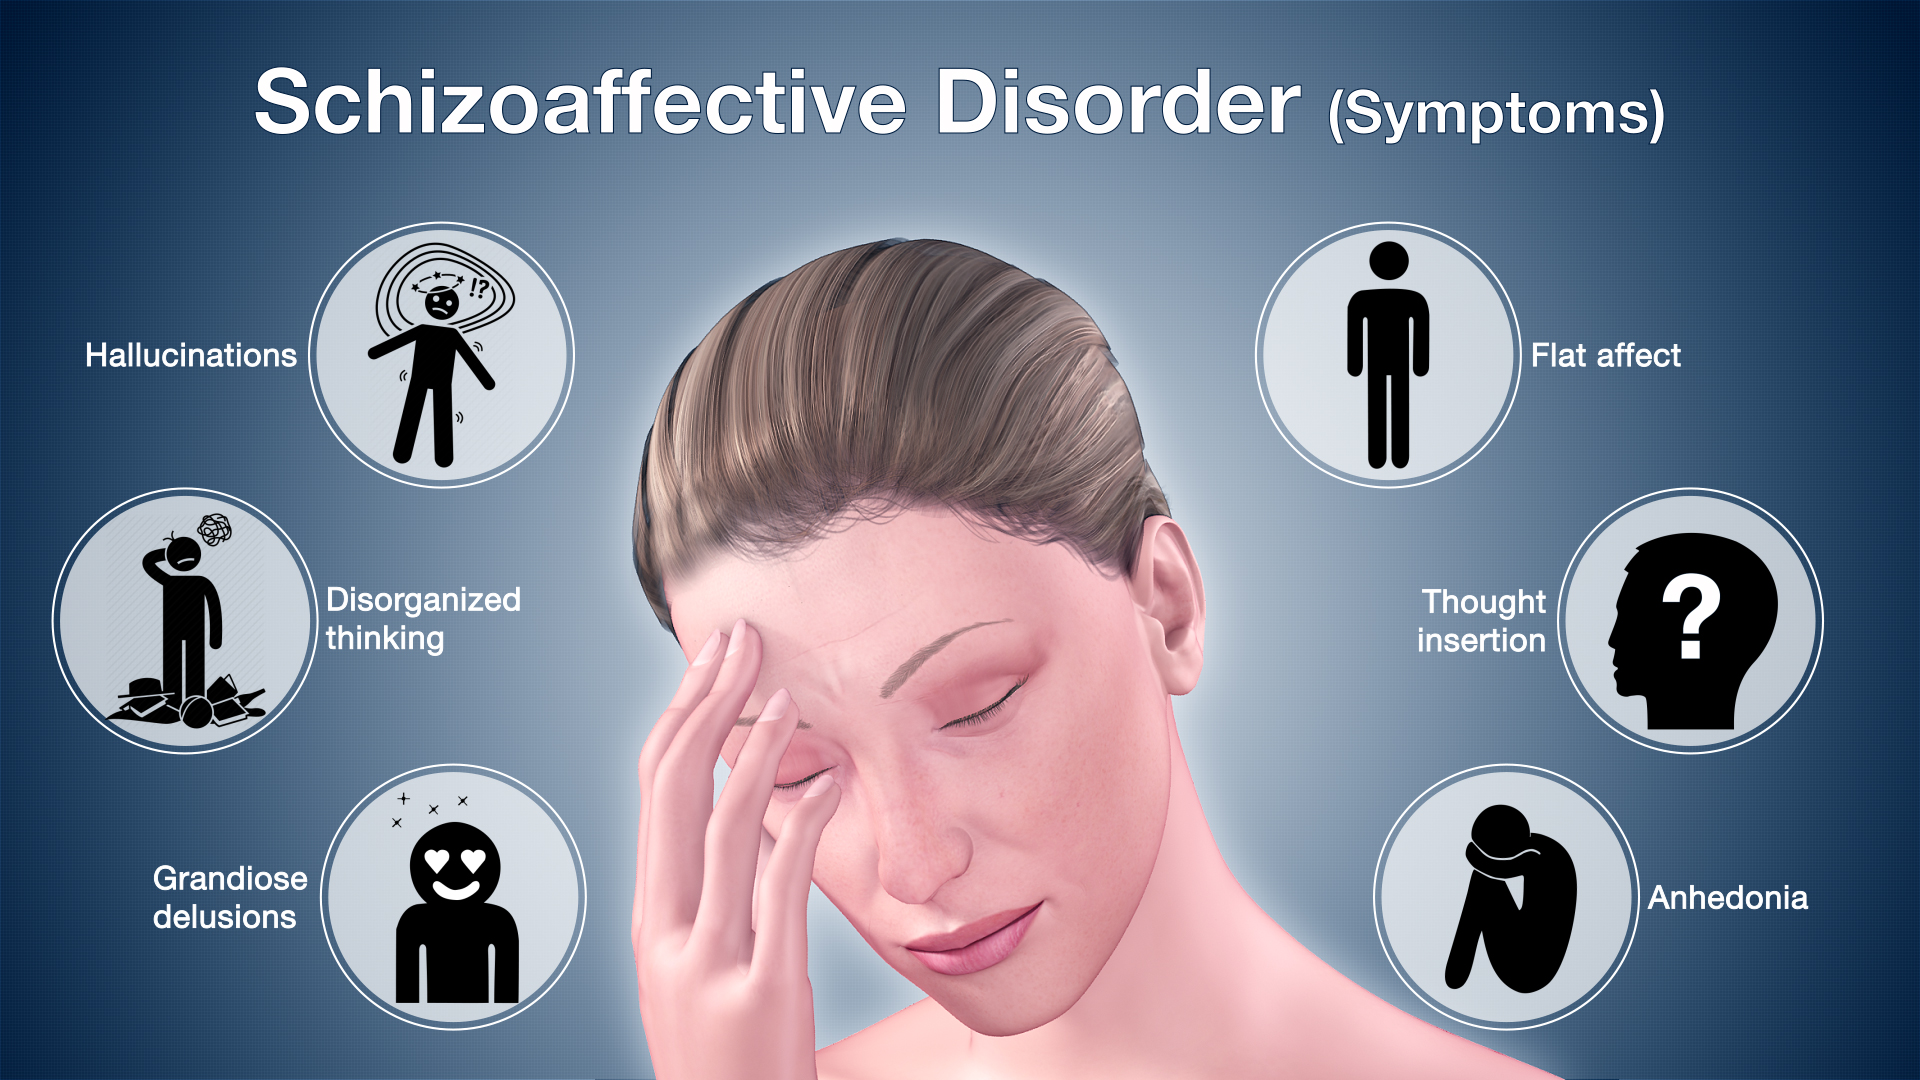 Symptoms of Schizoaffective Disorder